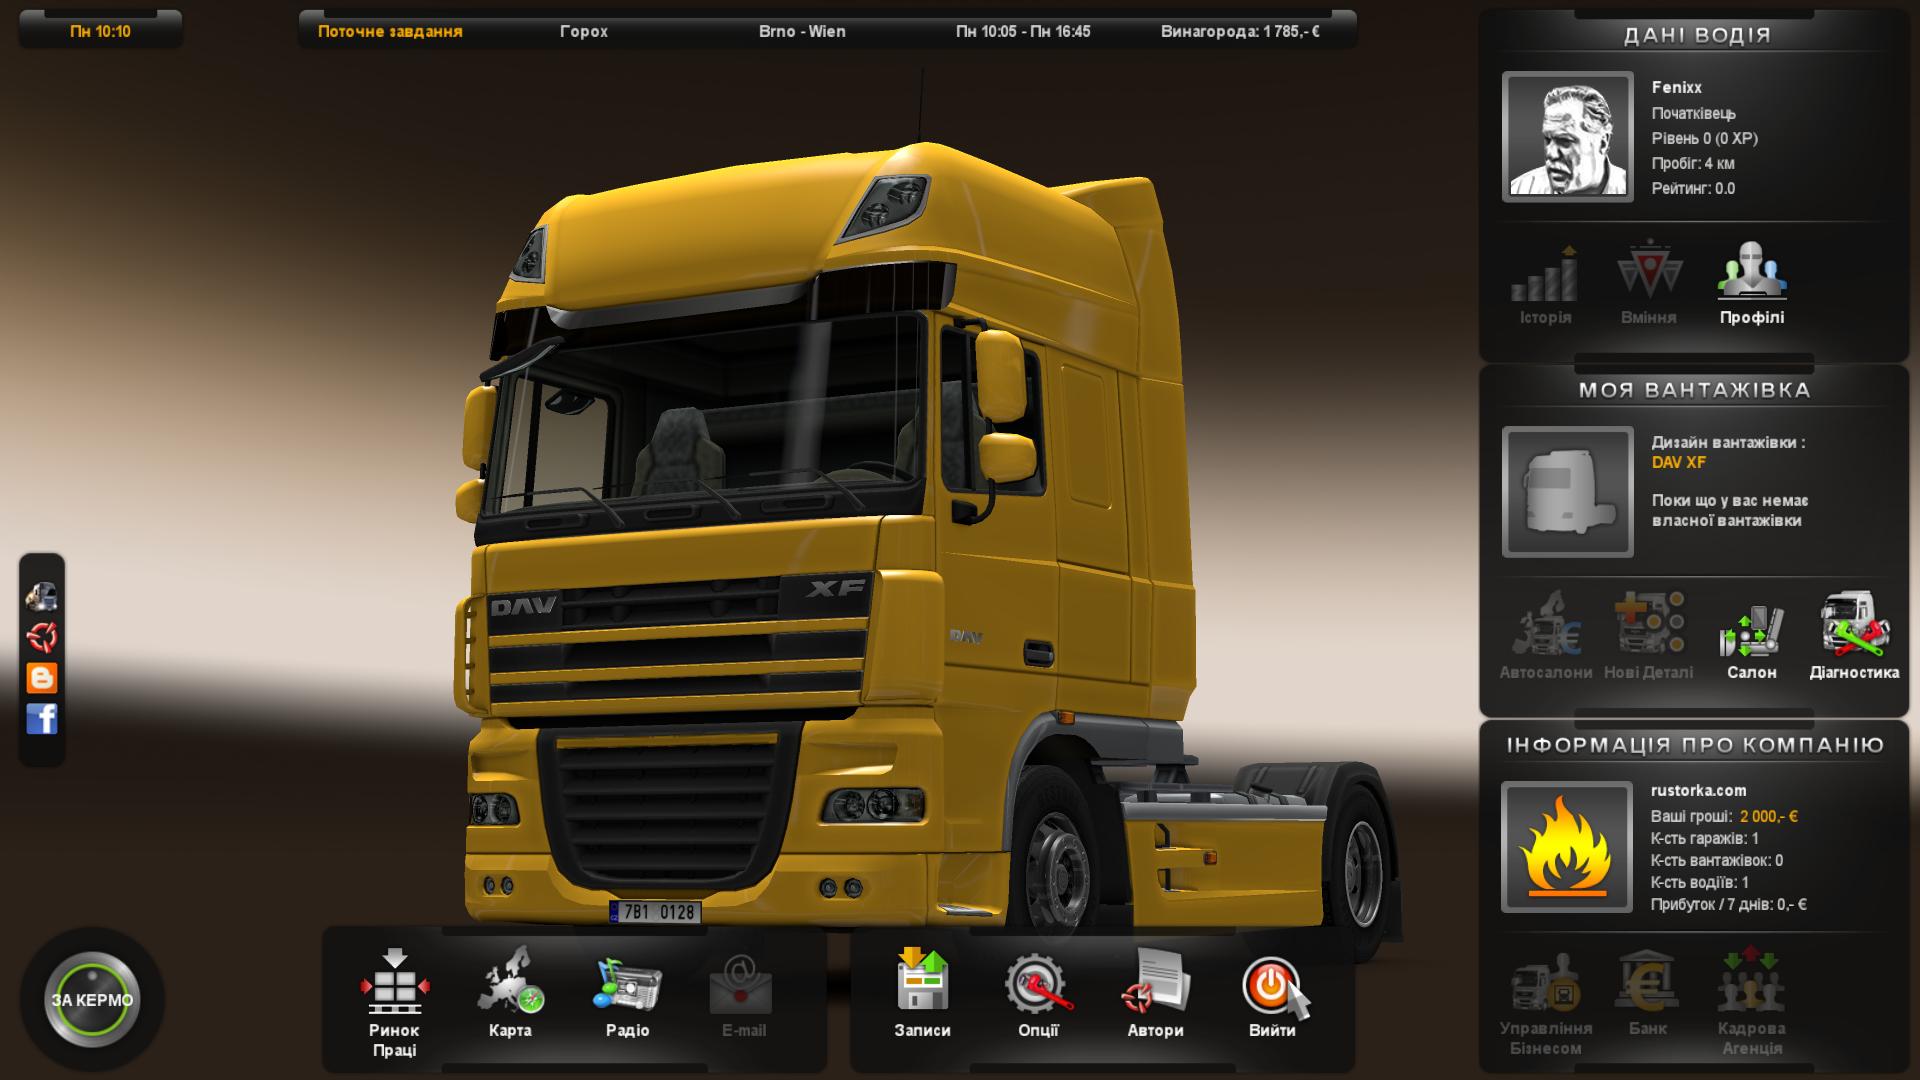 Почему не идет на windows 10 Euro Truck Simulator 2?